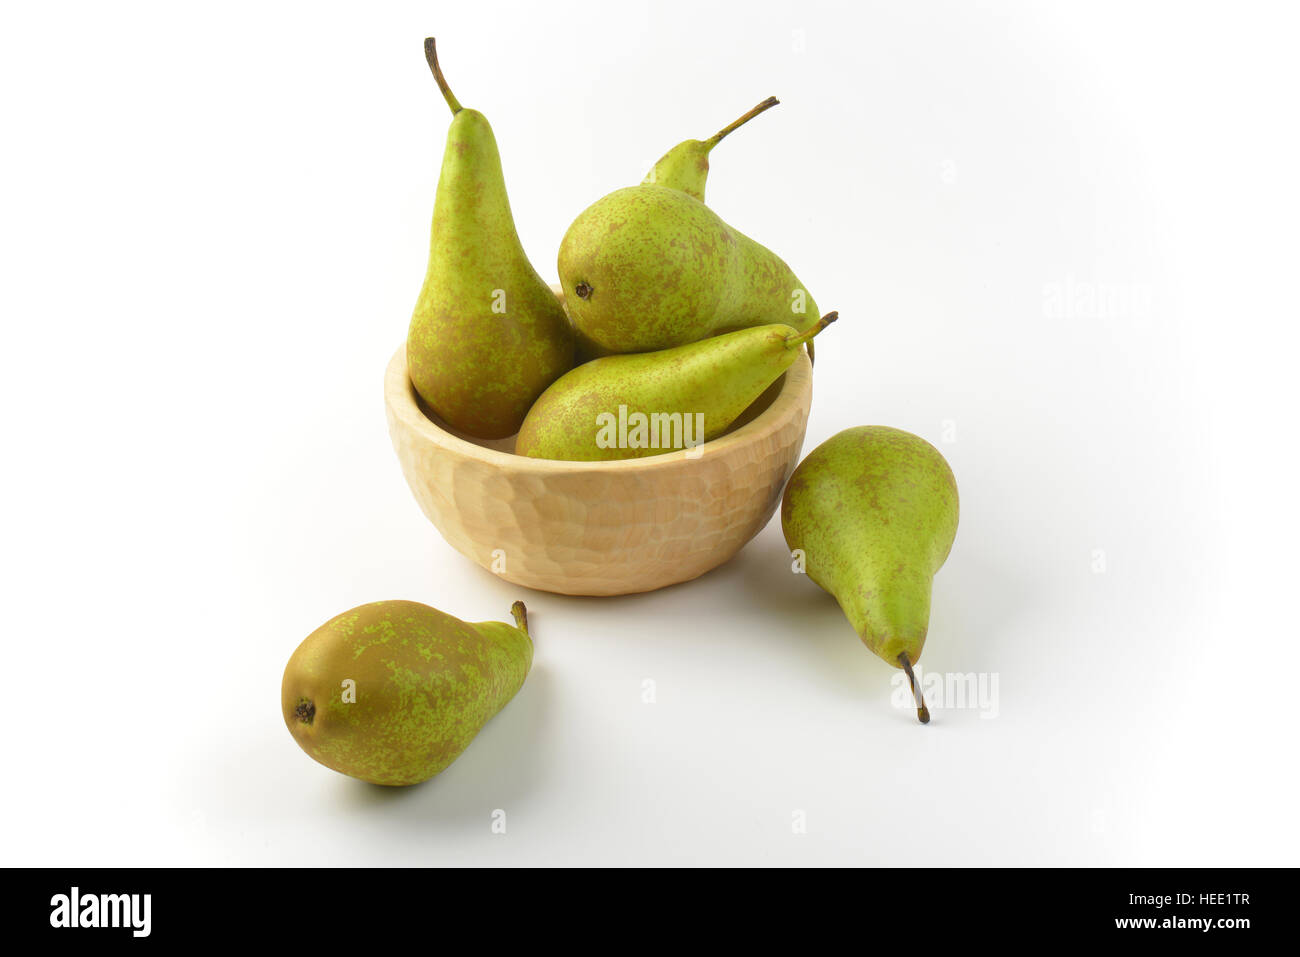 https://c8.alamy.com/comp/HEE1TR/fresh-green-pears-in-wooden-bowl-HEE1TR.jpg